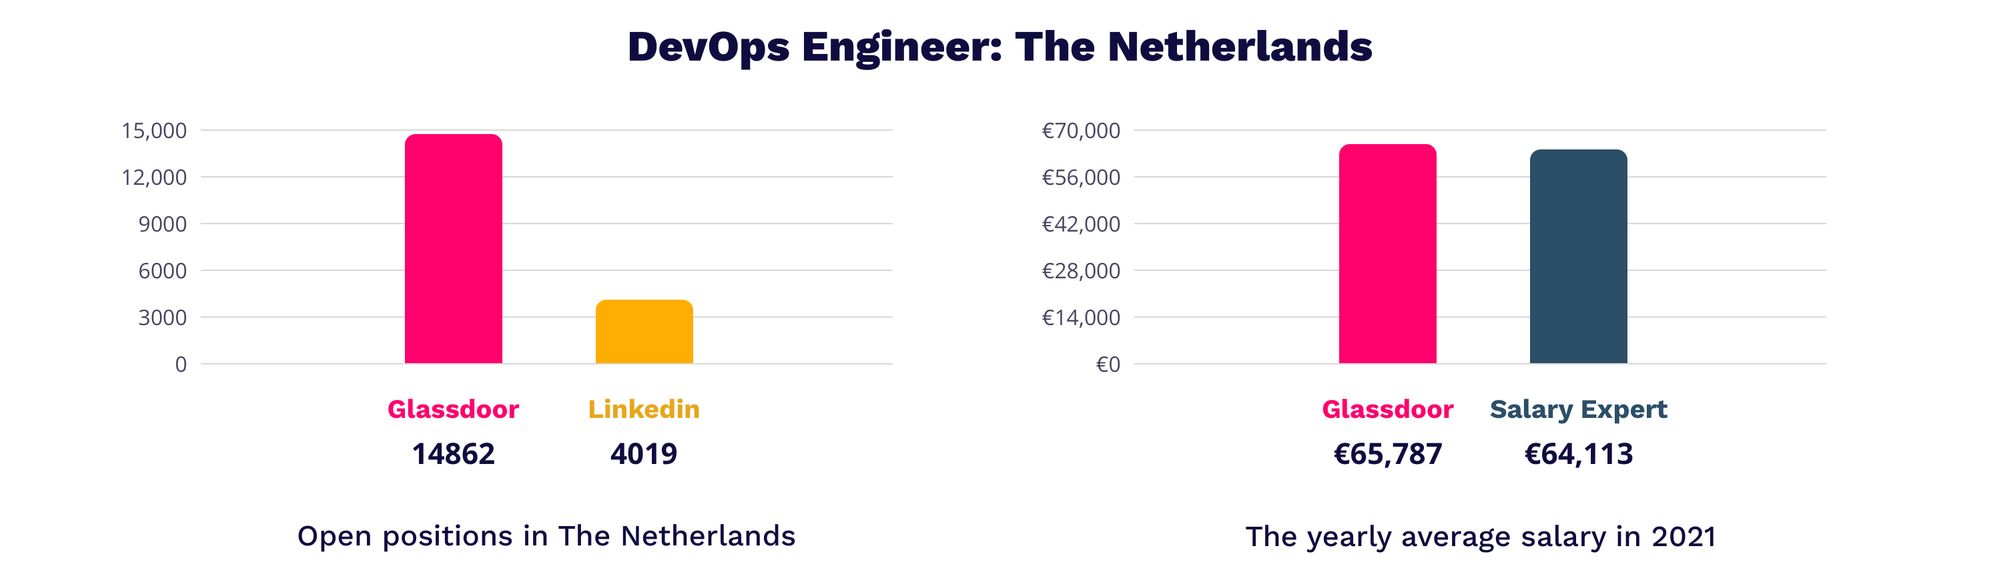 DevOps engineer salary - IT Jobs in The Netherlands | MagicHire.co